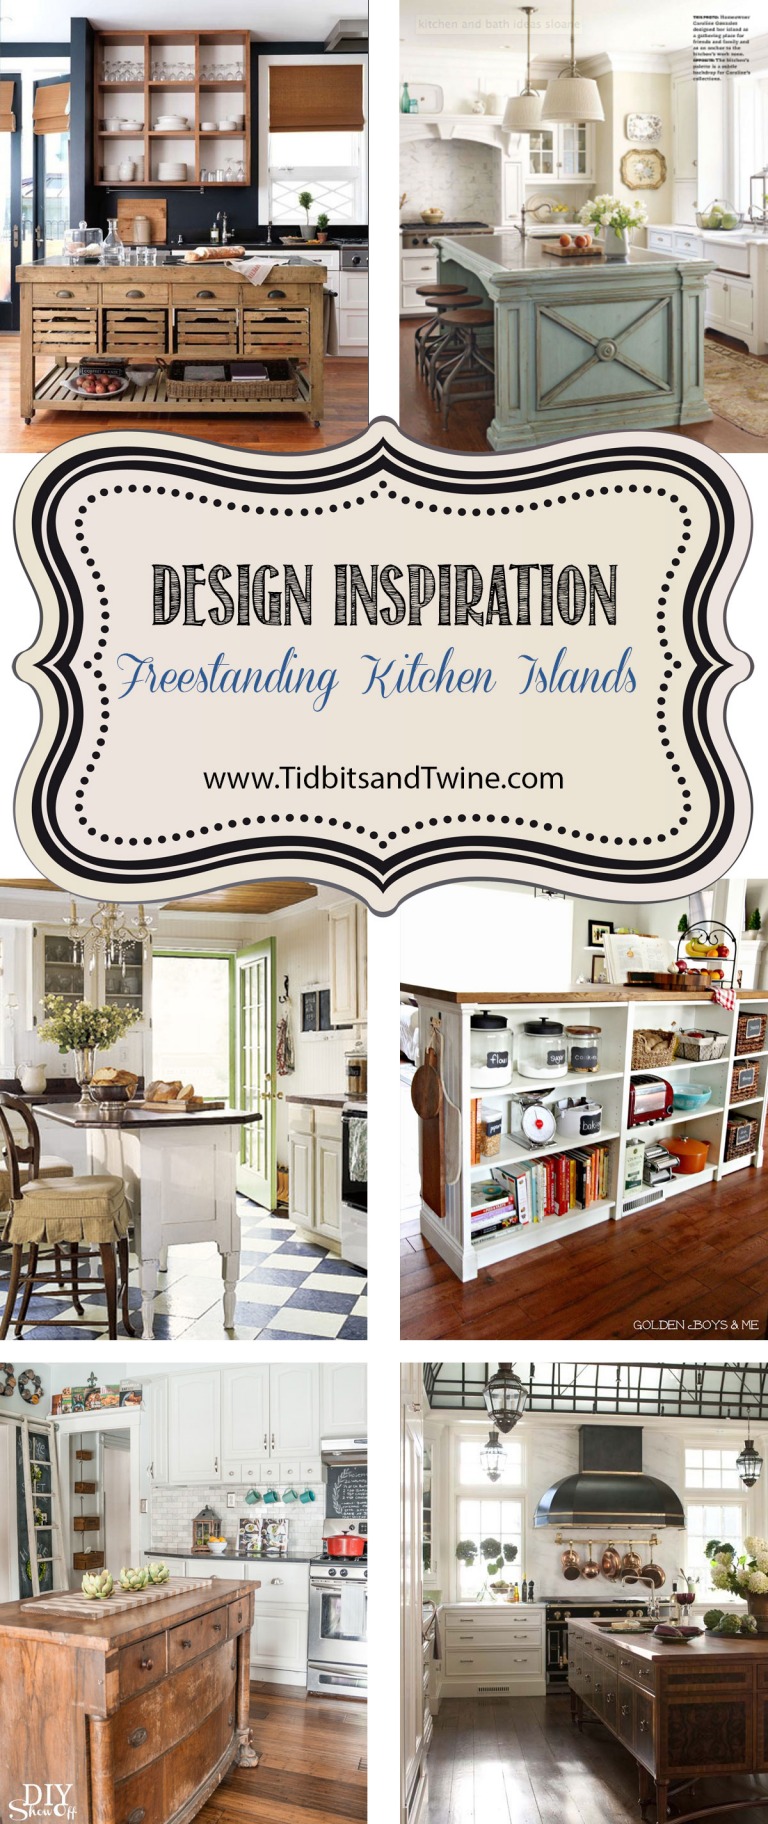 Design Inspiration: Freestanding Kitchen Islands